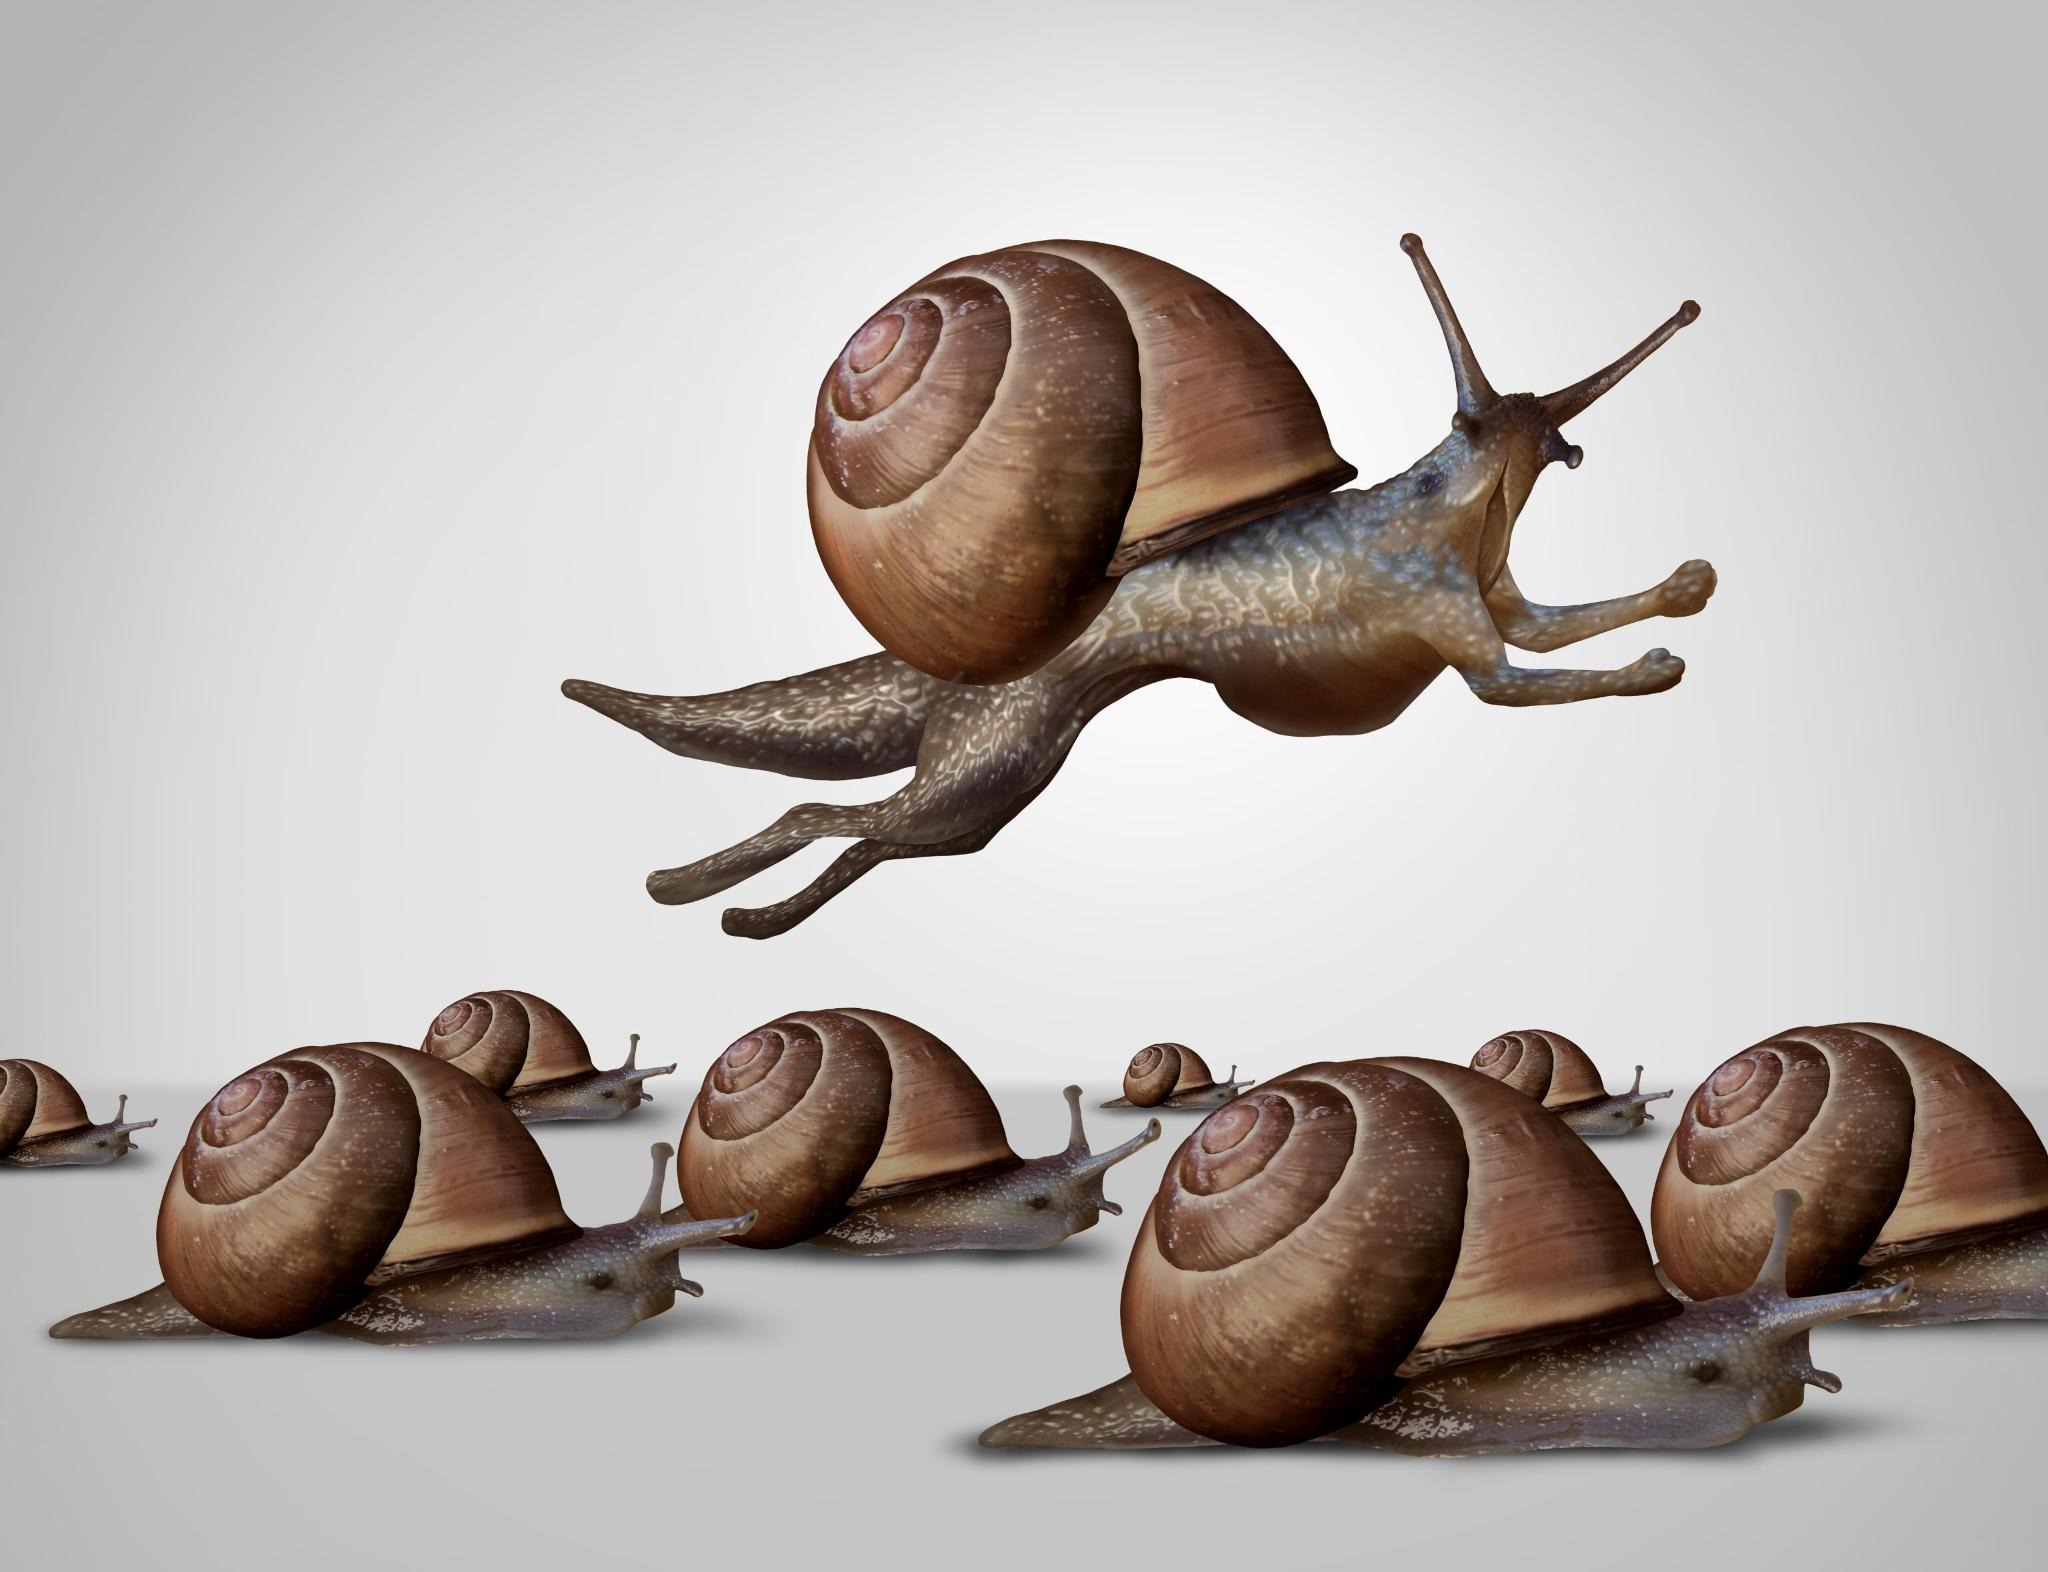 A flying snail